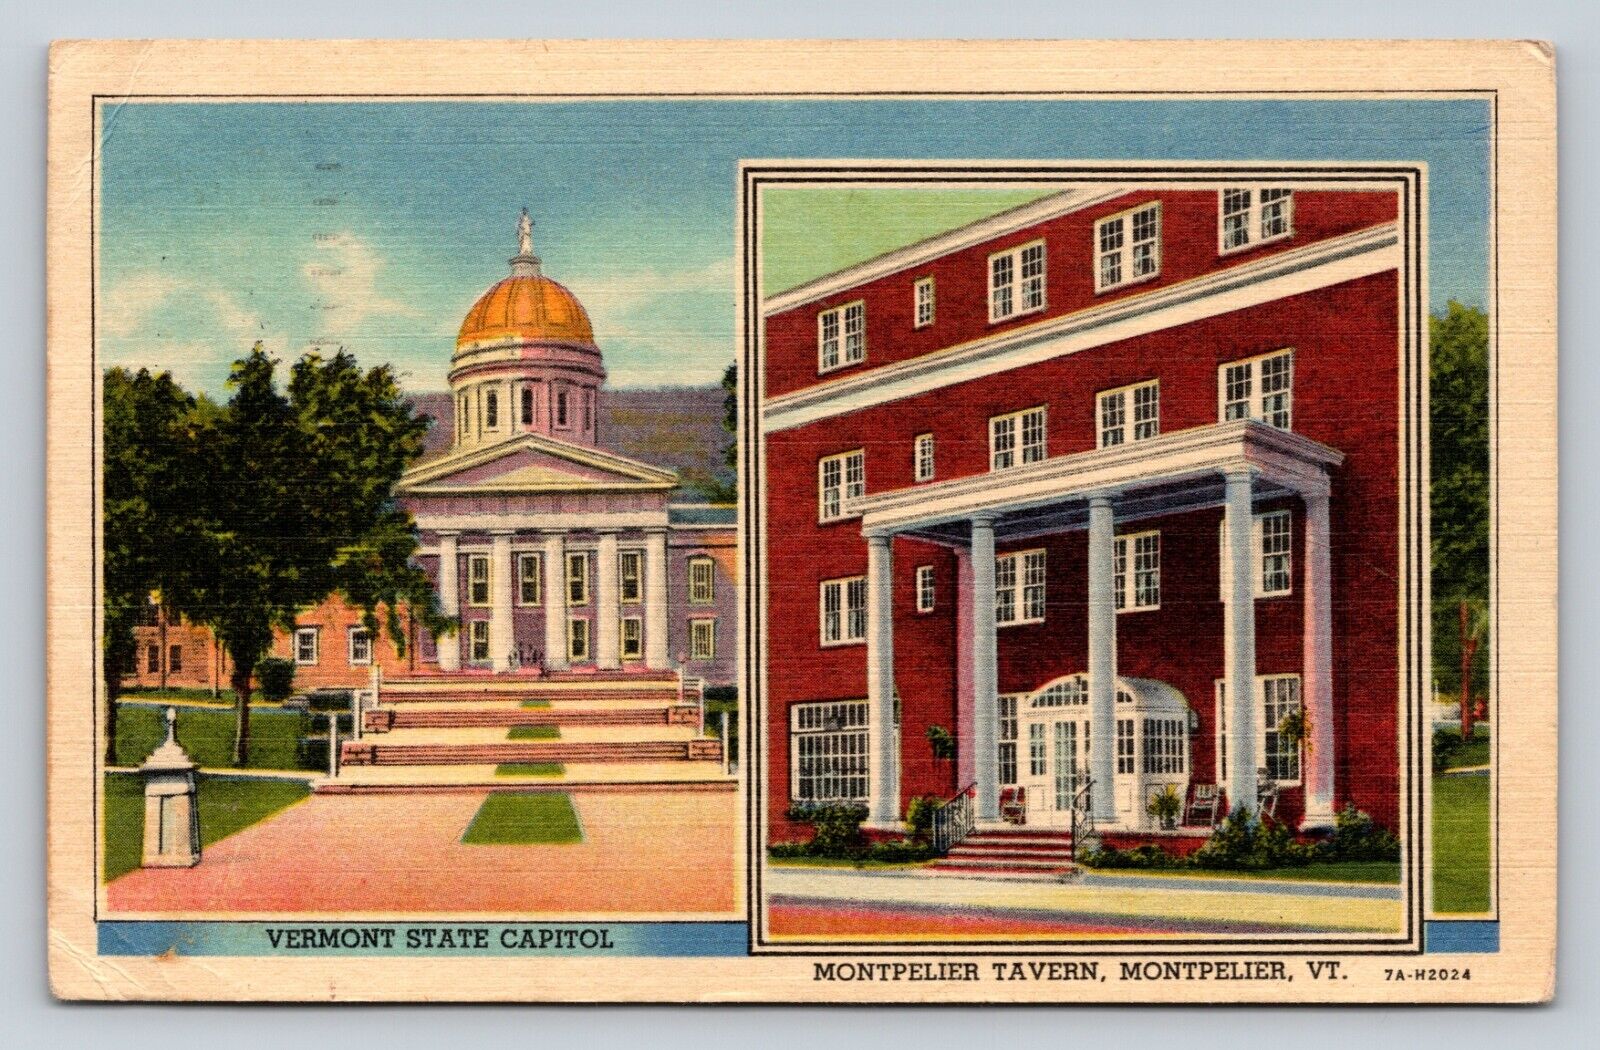 c1959 Vermont State Capital Montpelier Tavern Vermont VINTAGE Postcard